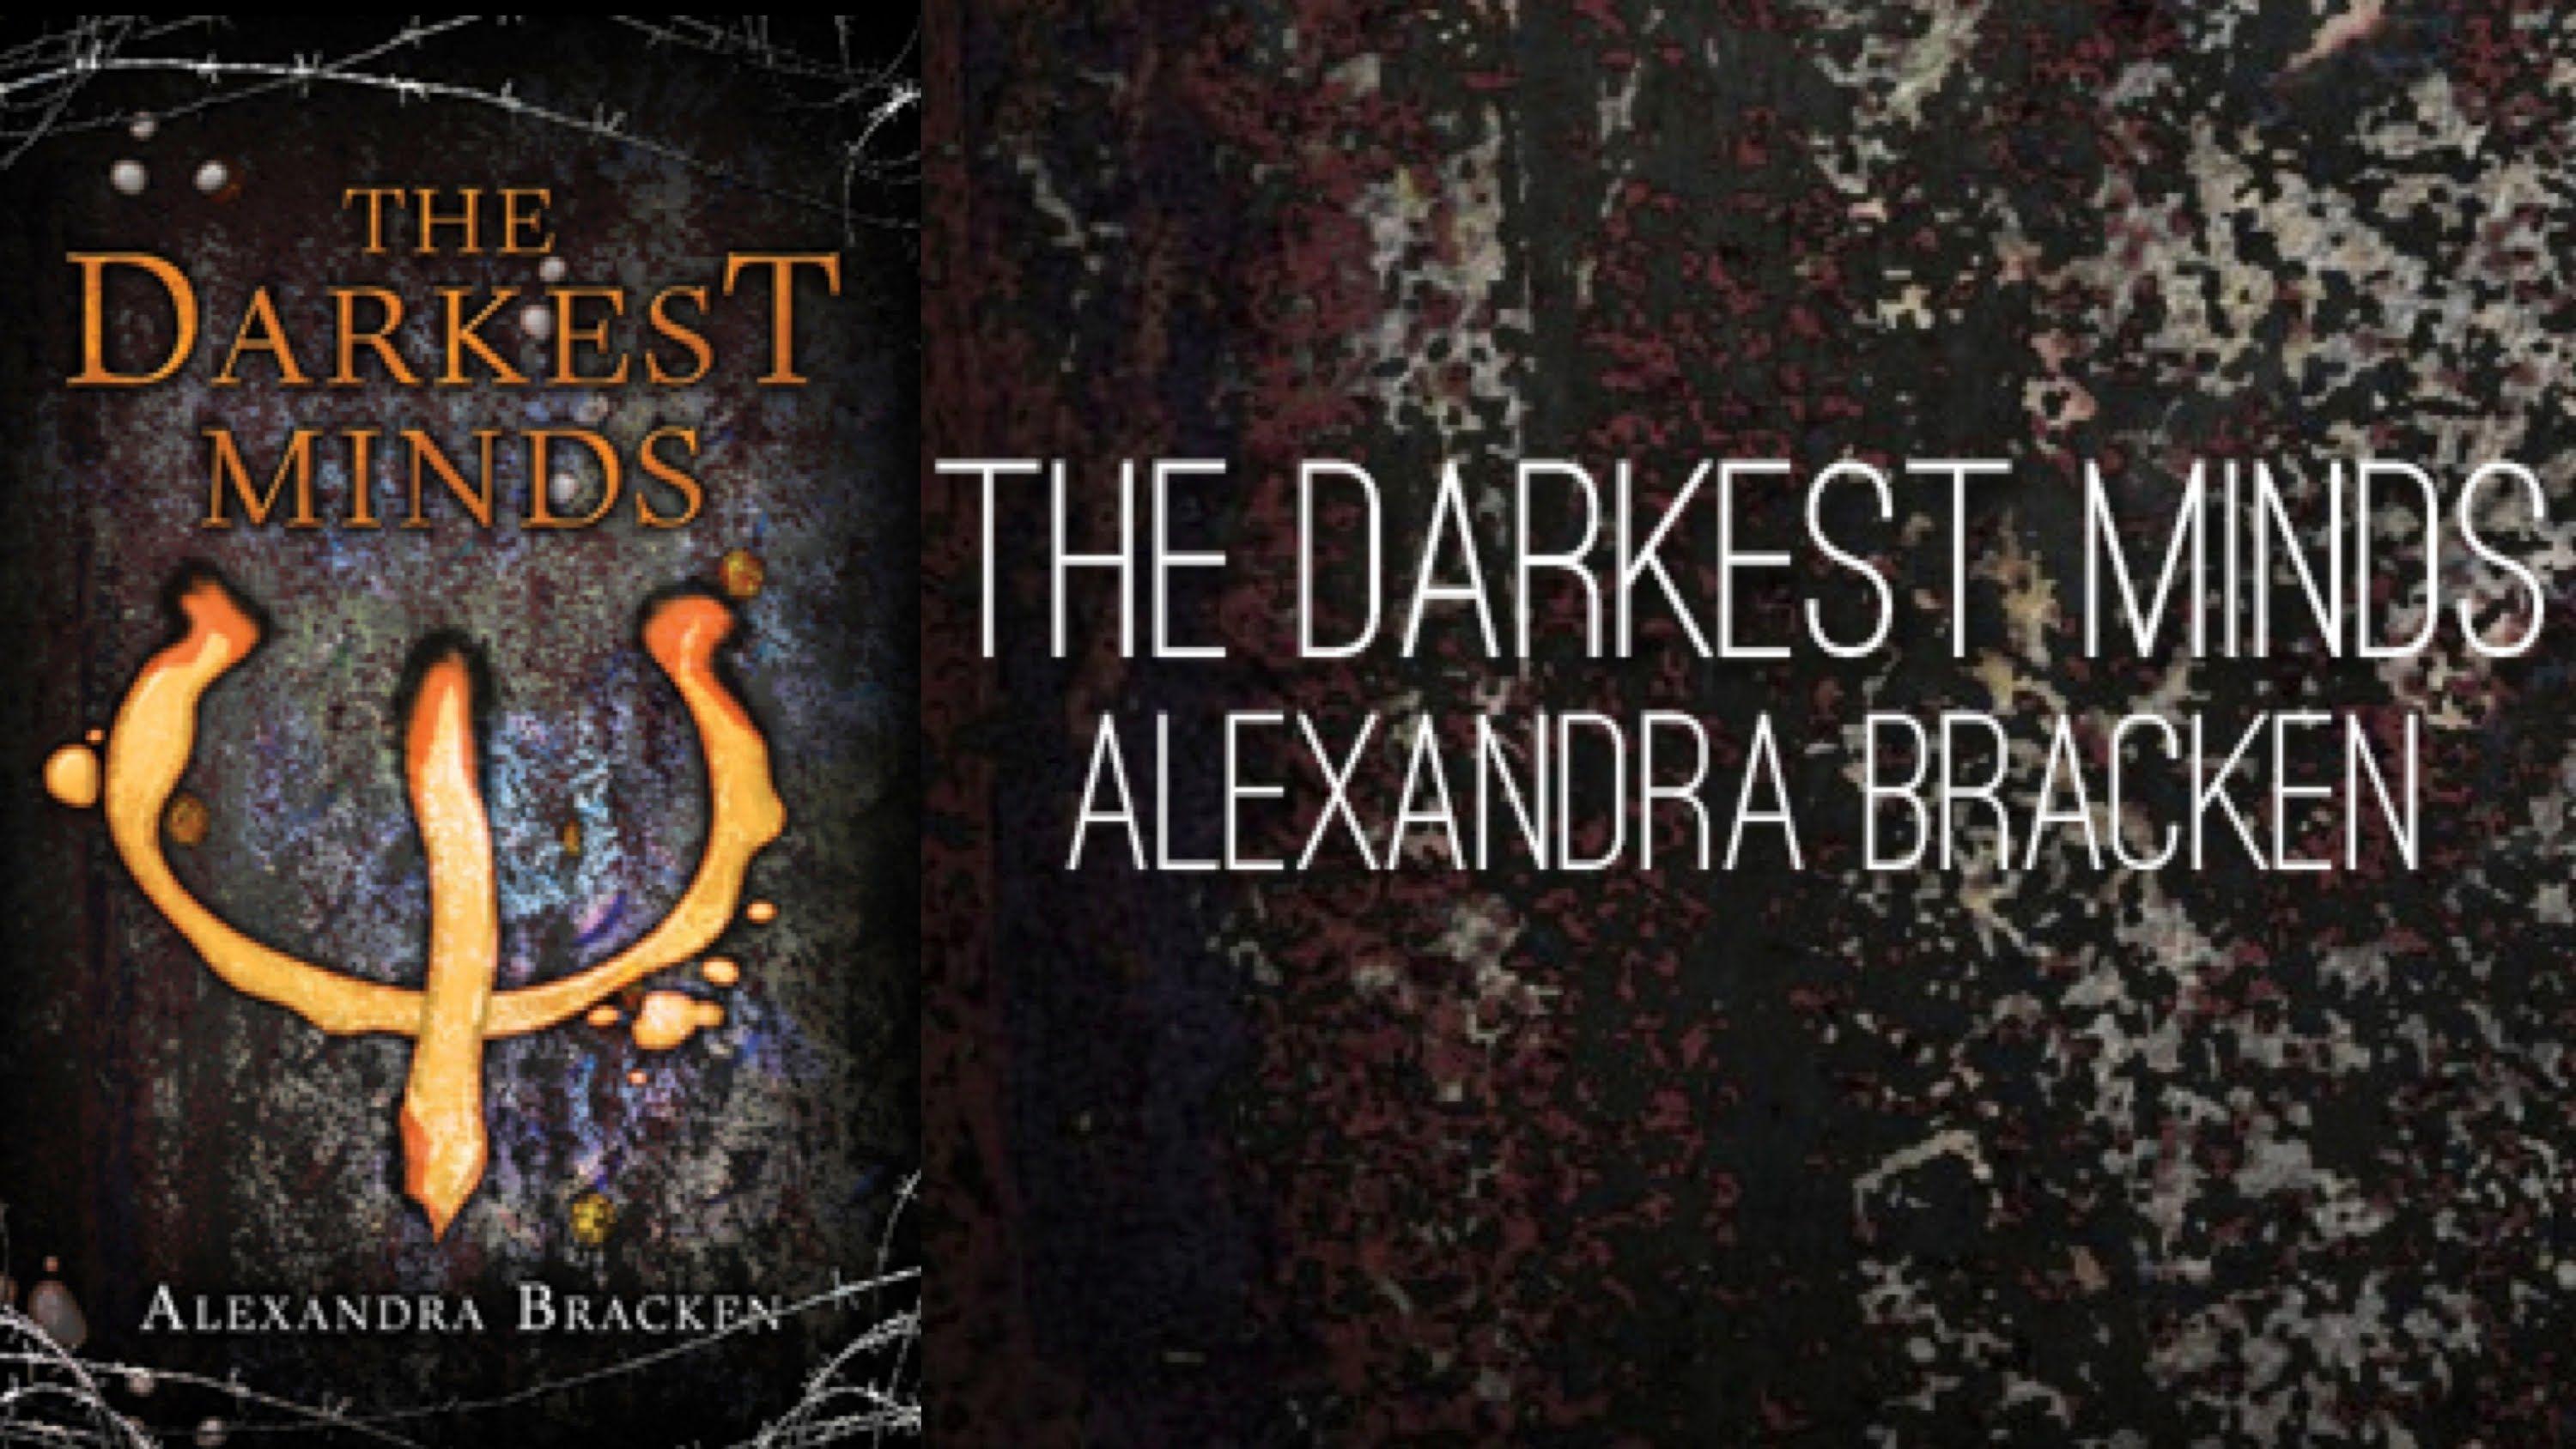 The Darkest Minds by Alexandra Bracken JUST READS